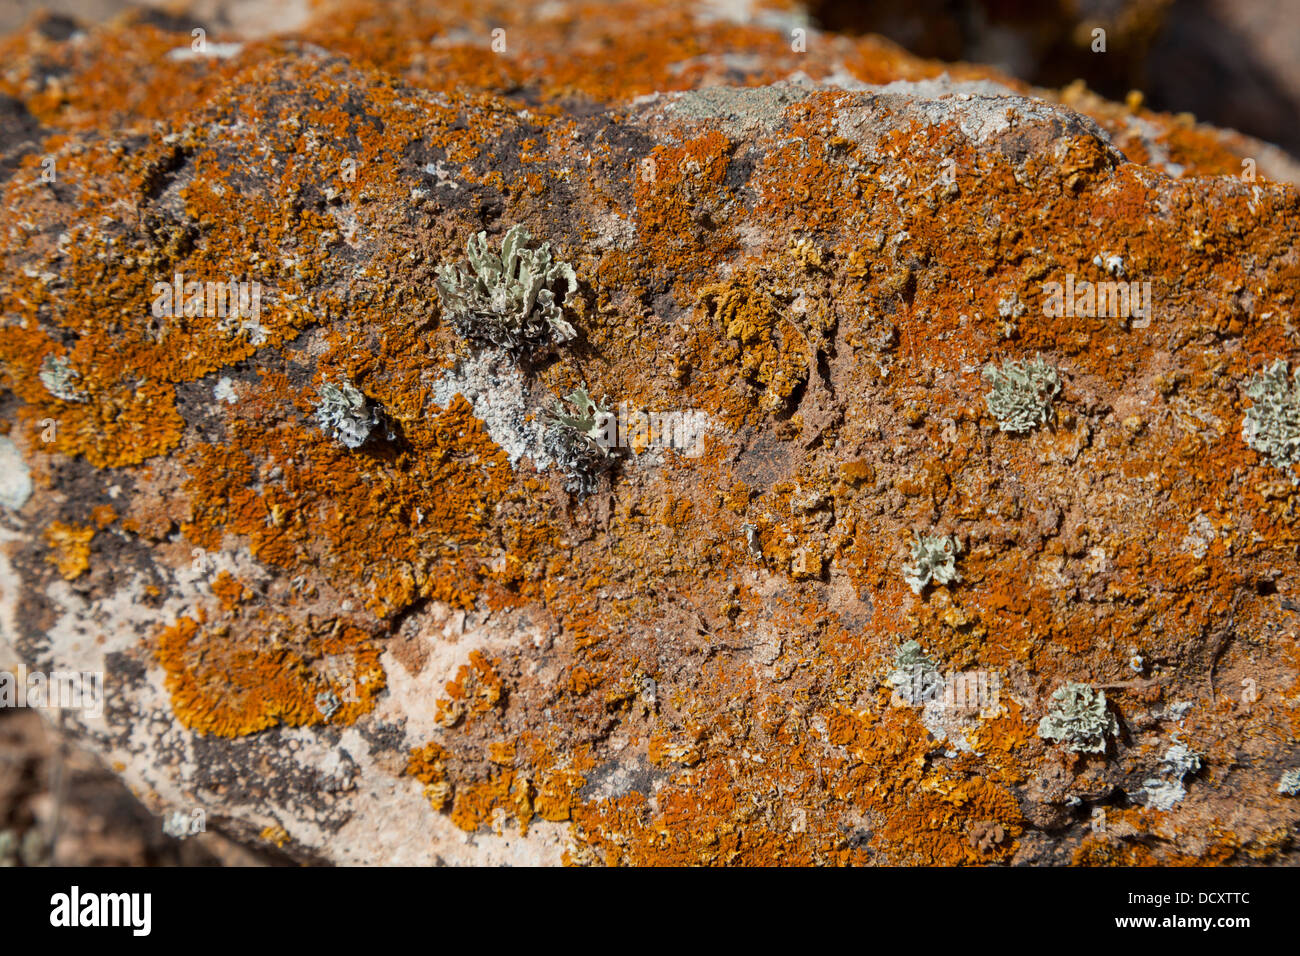 Crustose lichens on lava rocks, Lanzarote, Canary Islands, Spain Stock Photo